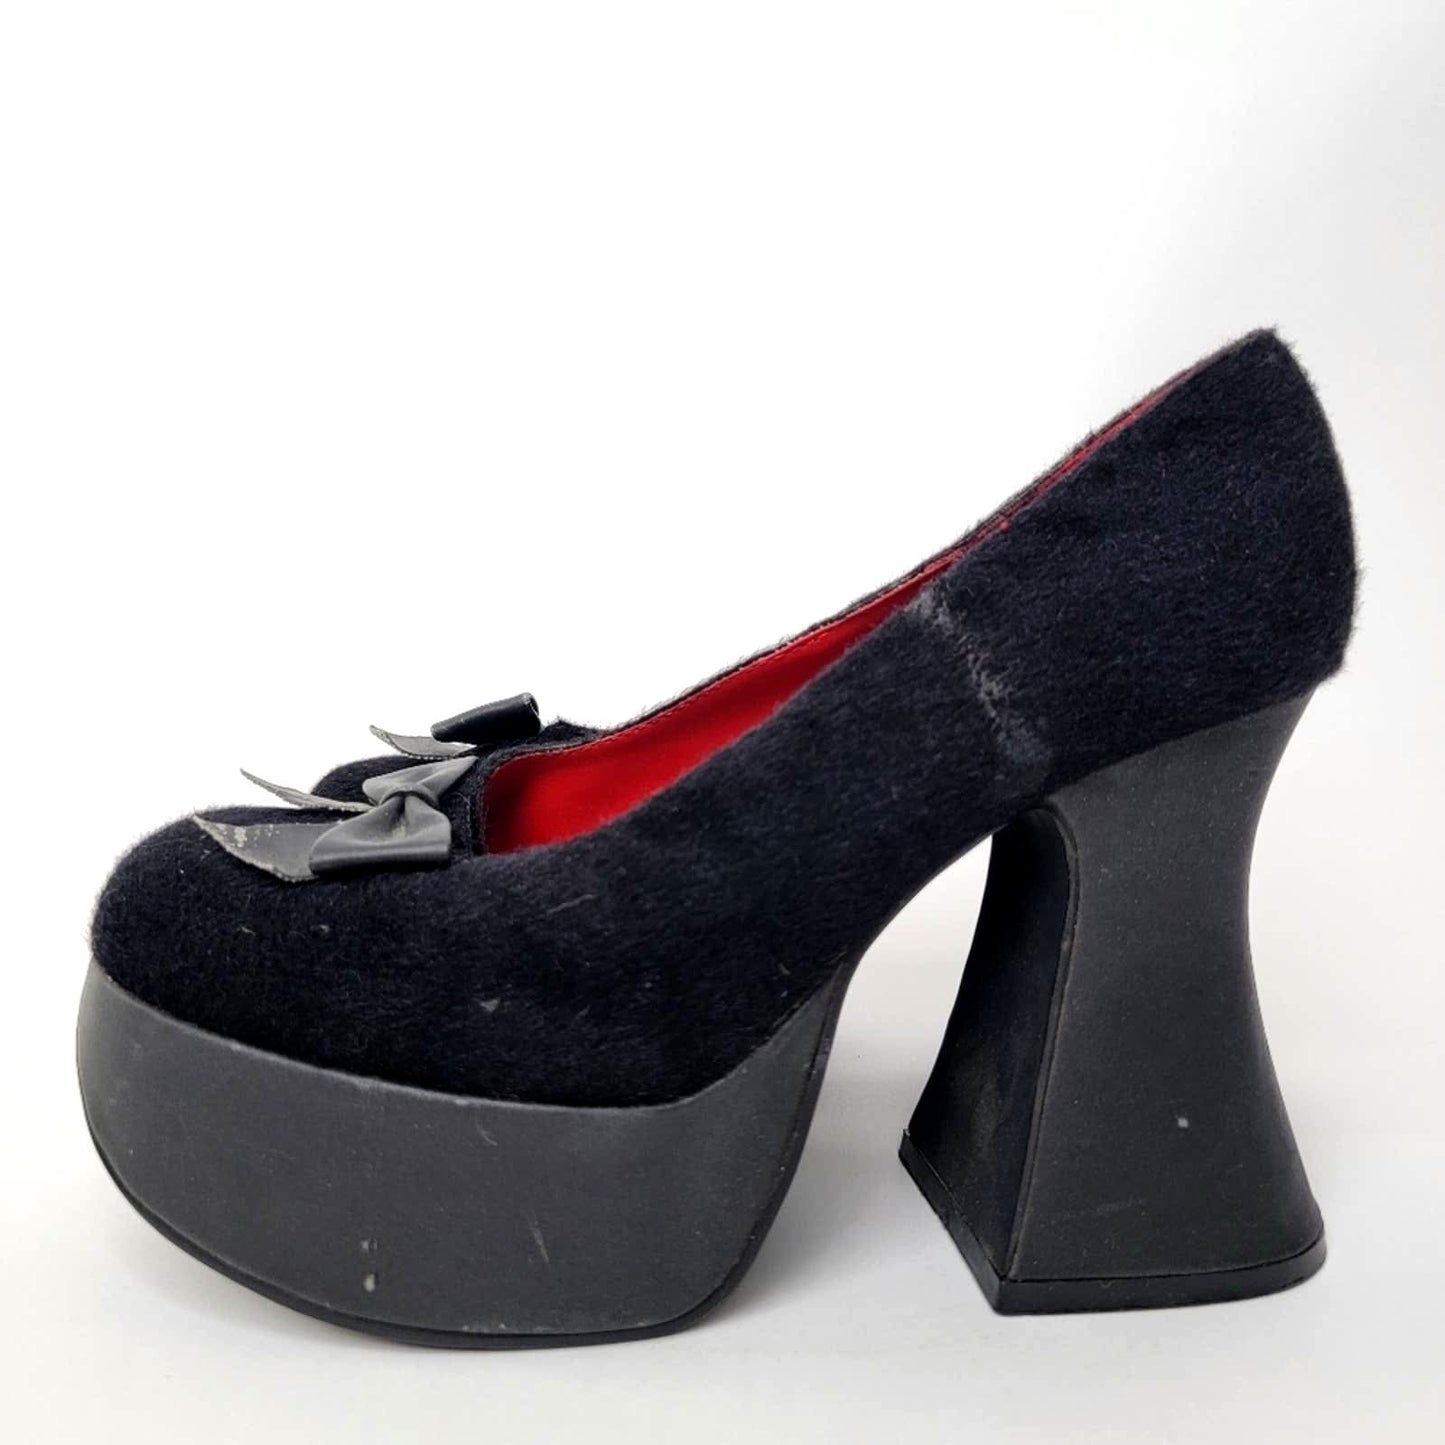 Vintage 90s Morbid Threads Goth High Heel Platform Witchy Shoes - 8